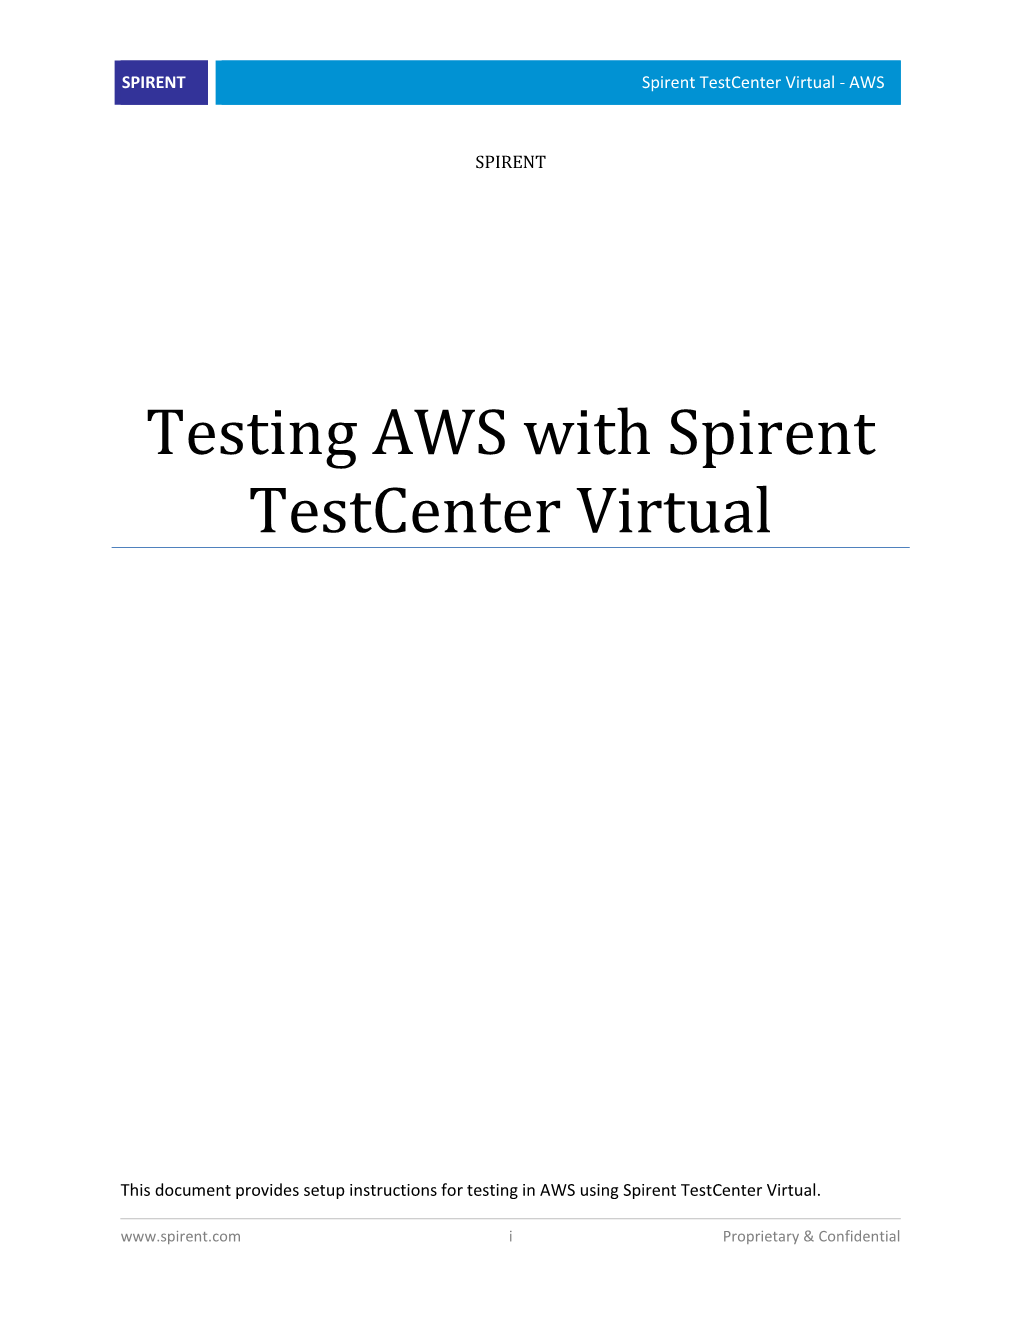 Testing AWS with Spirent Testcenter Virtual